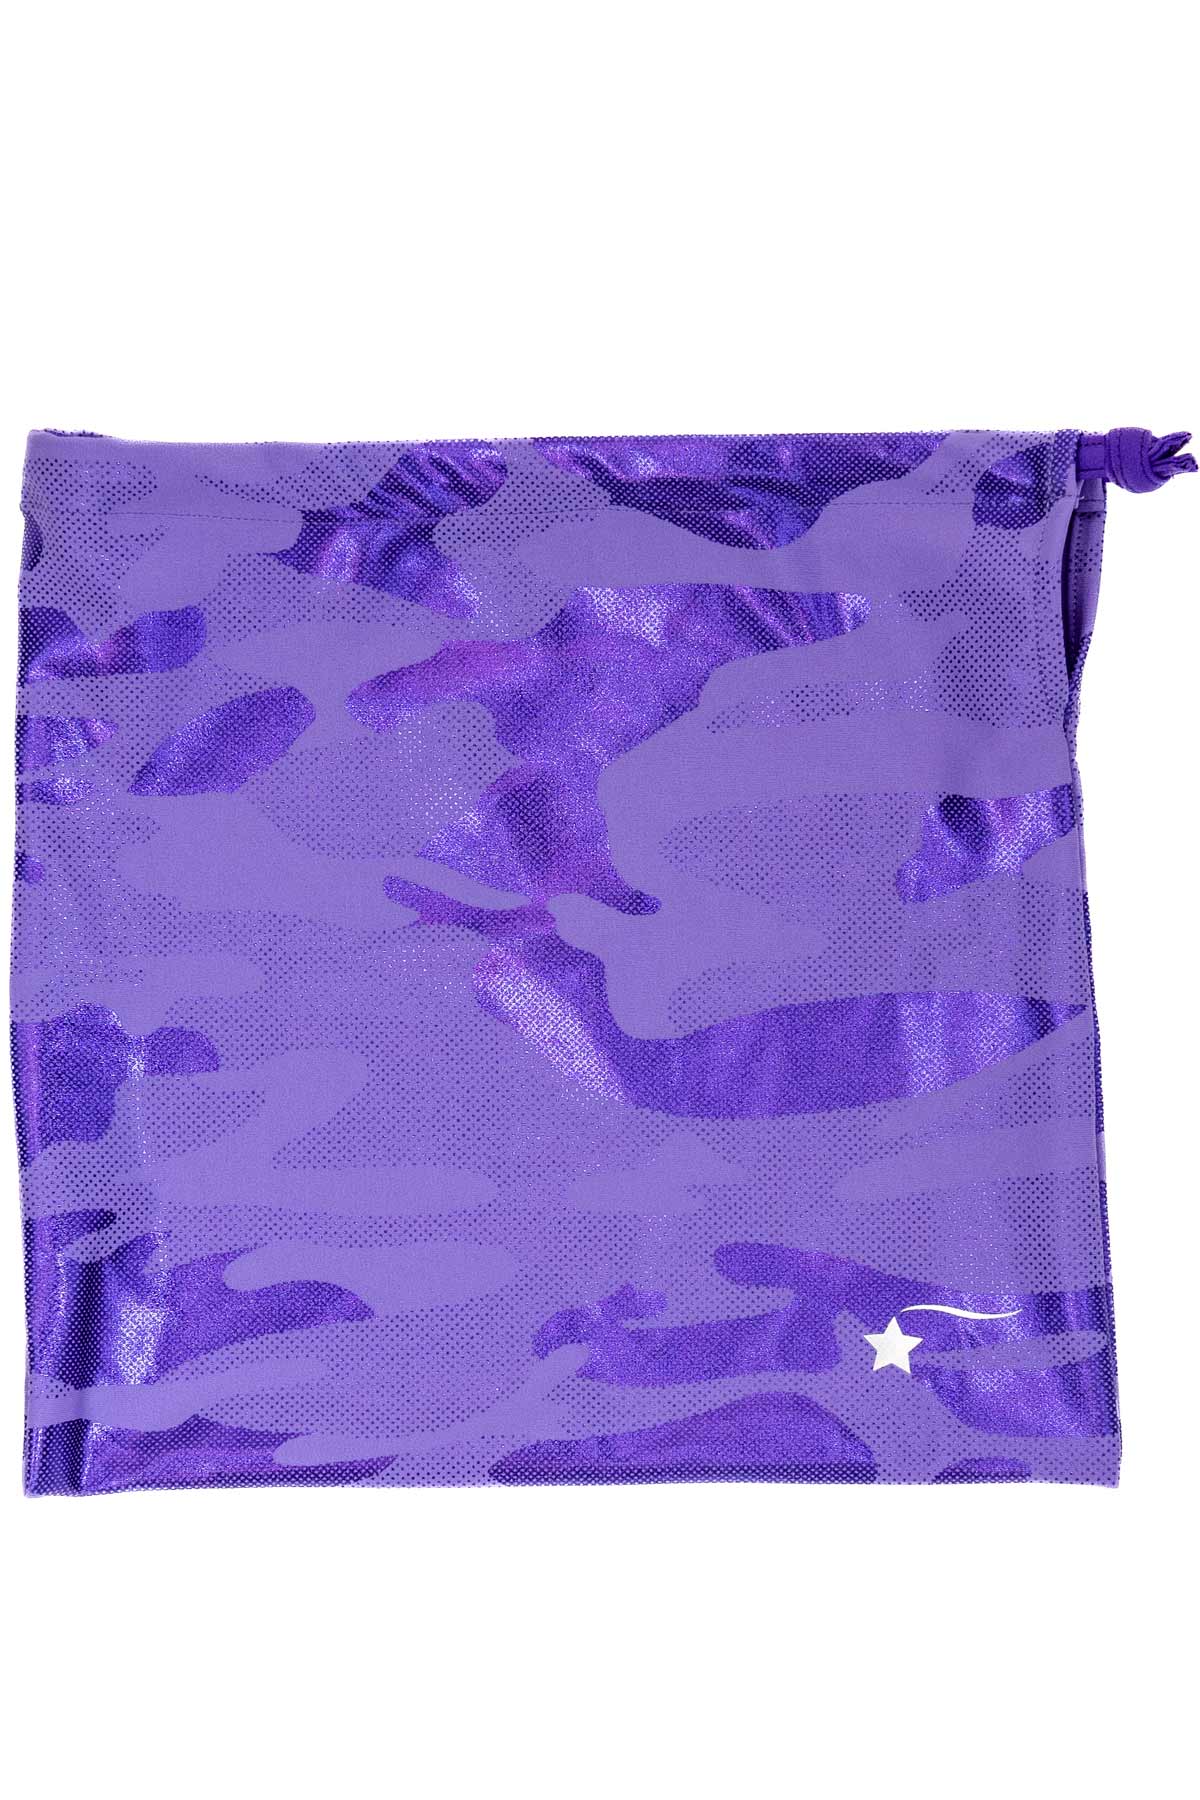 Ultraviolet Camo Grip Bag